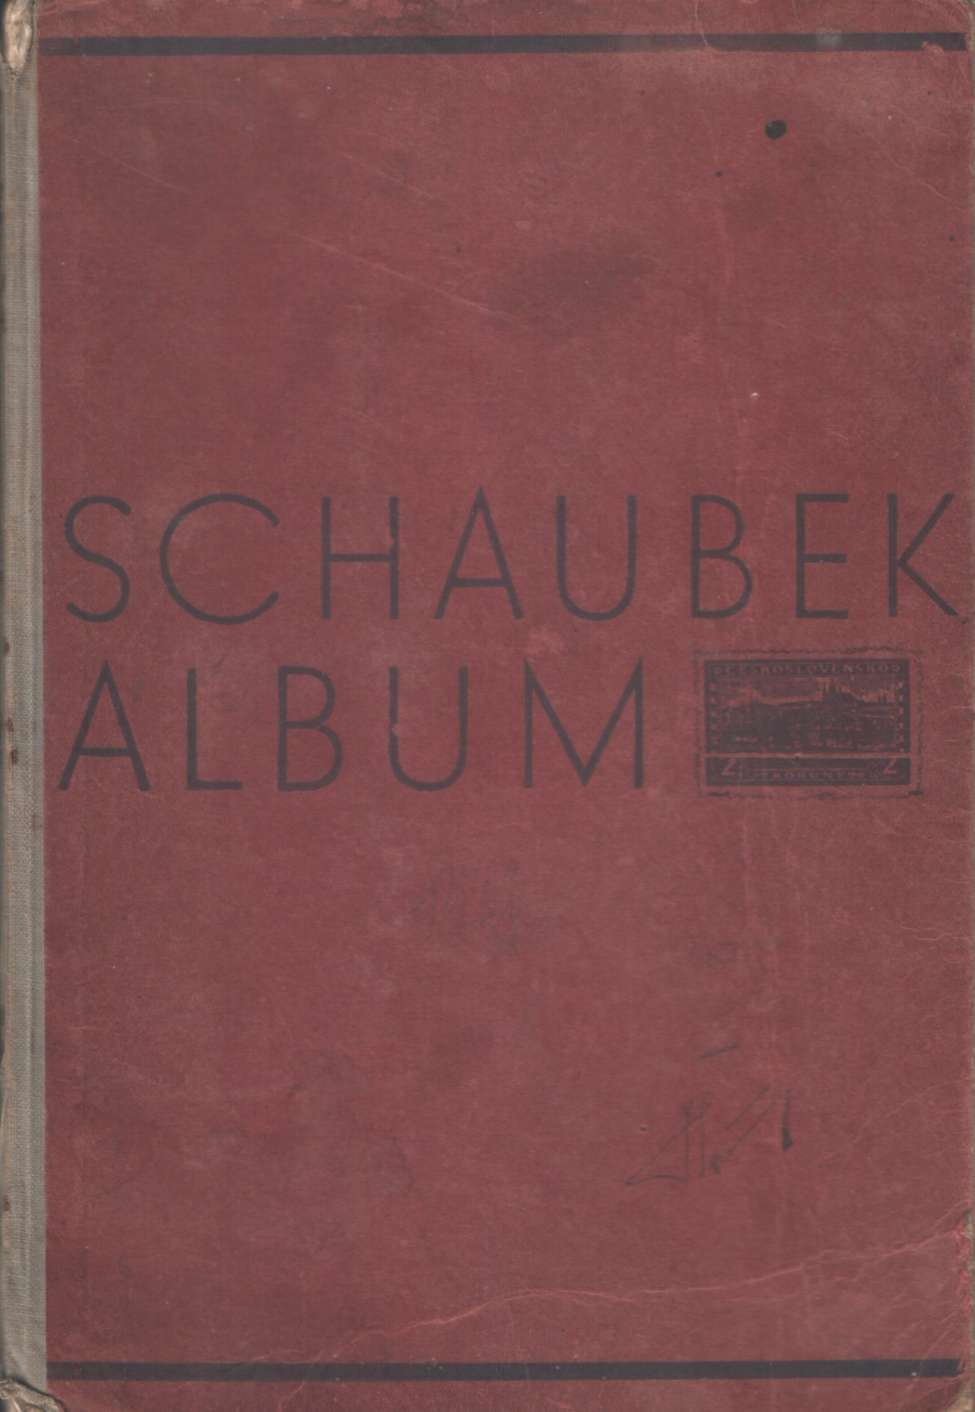 Comic Book Cover For Schaubek Album